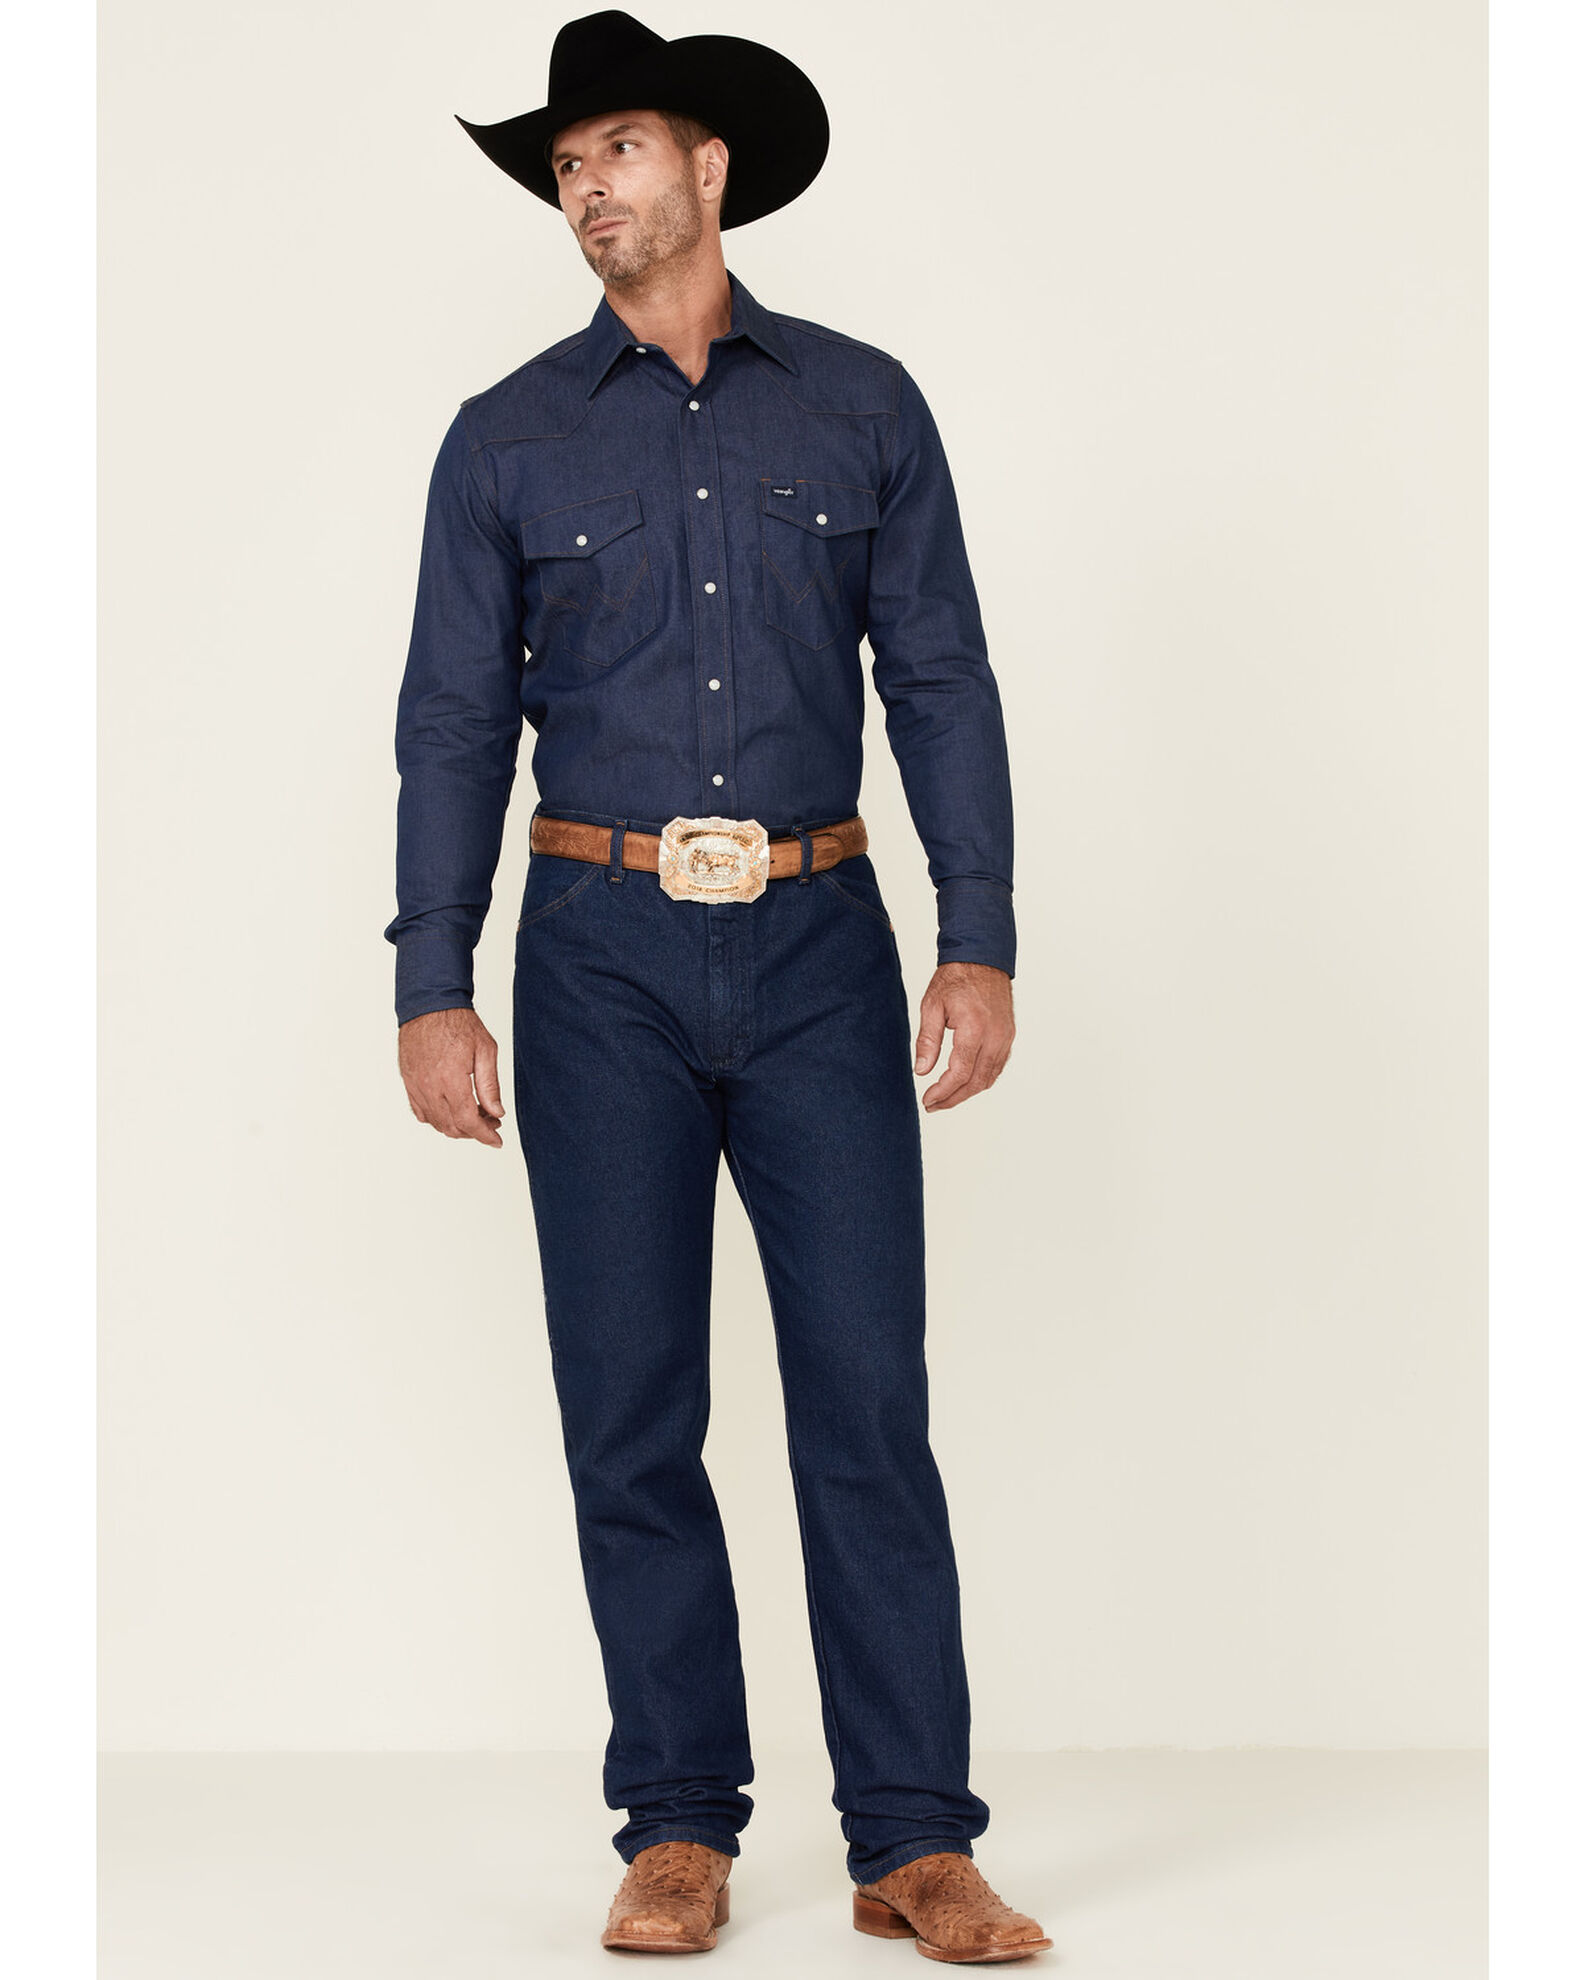 Wrangler Men's 13MWZ Cowboy Cut Original Fit Prewashed Jeans | Sheplers